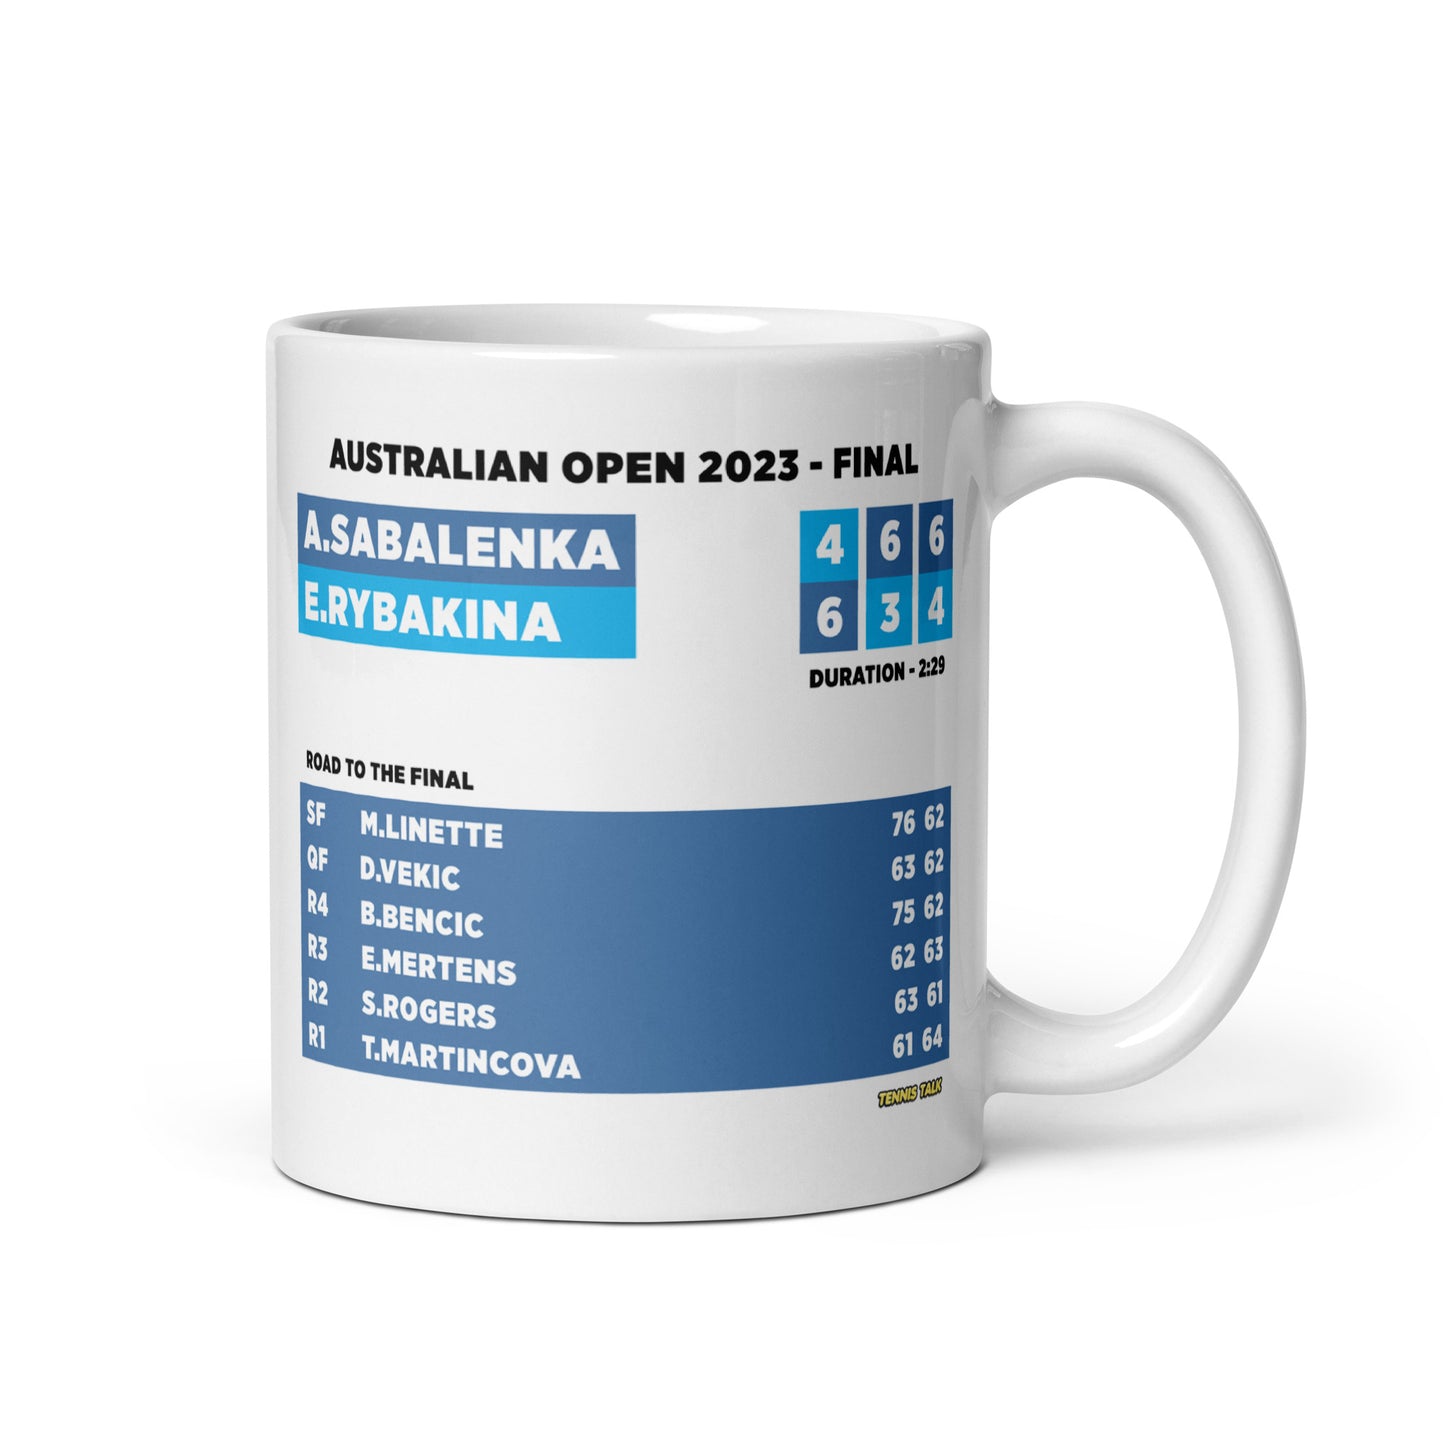 Aryna Sabalenka vs Elena Rybakina - Australian Open 2023 Final Mug